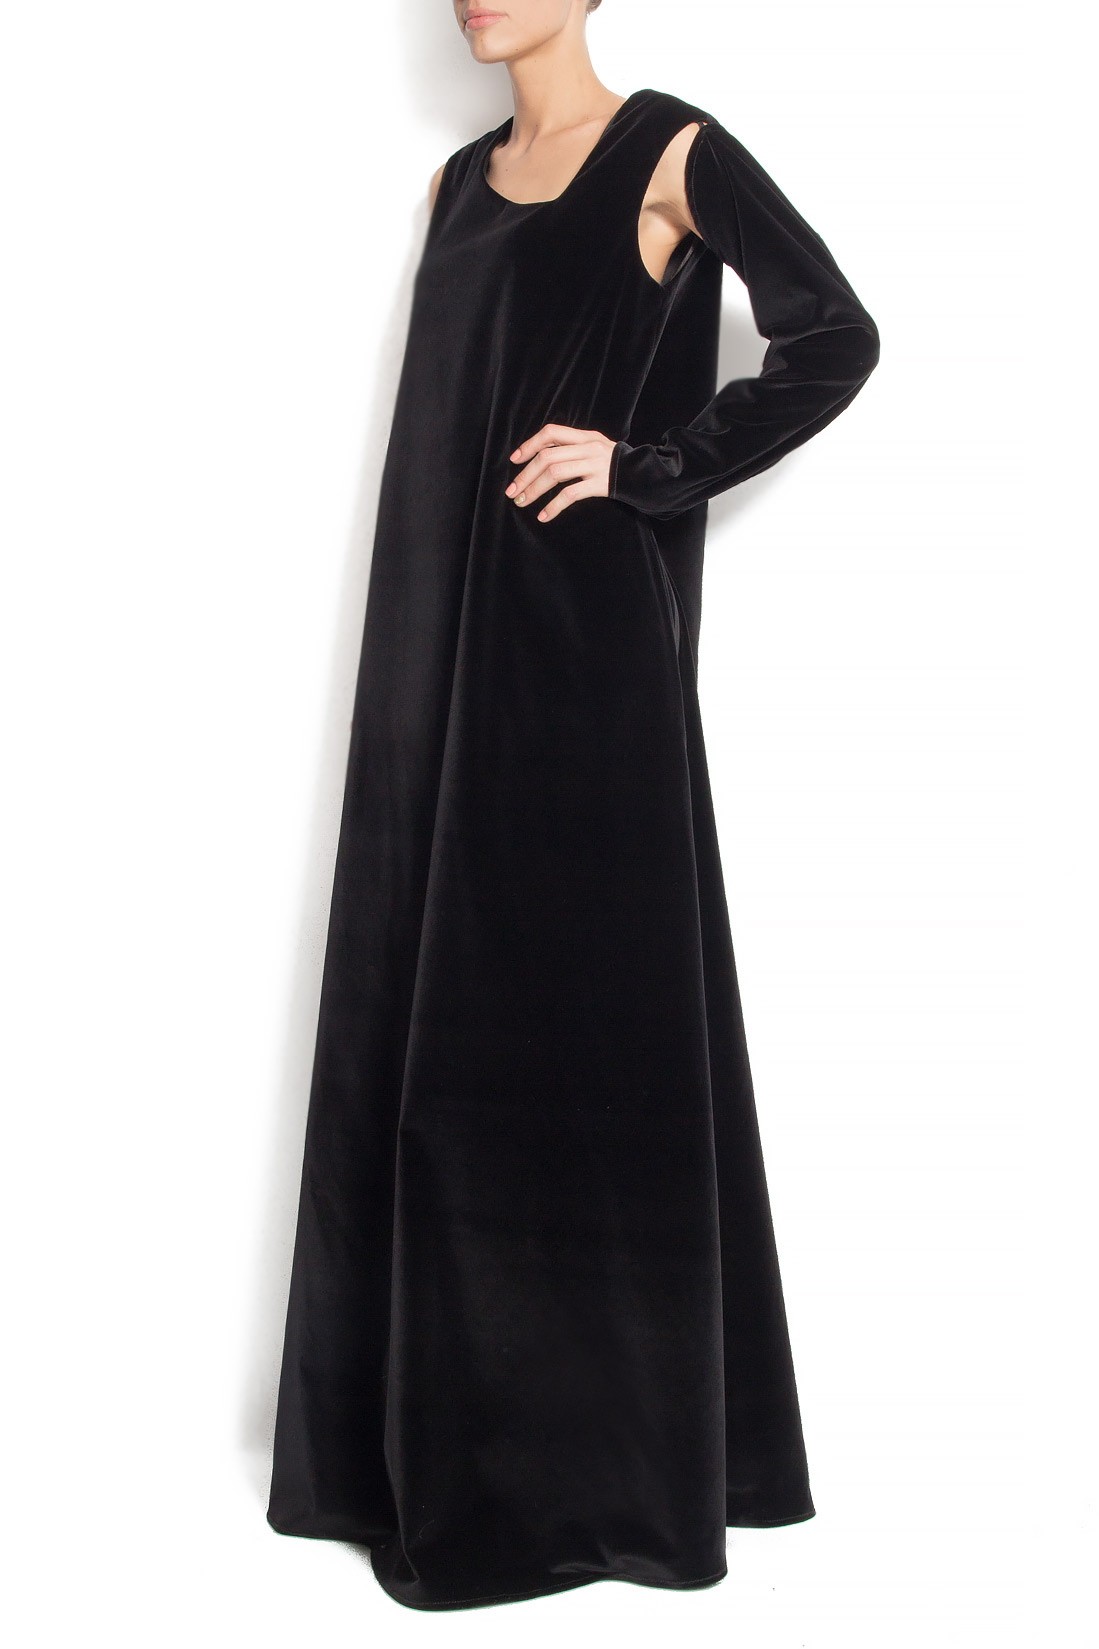 Velvet dress with removable sleeve Aer Wear image 1